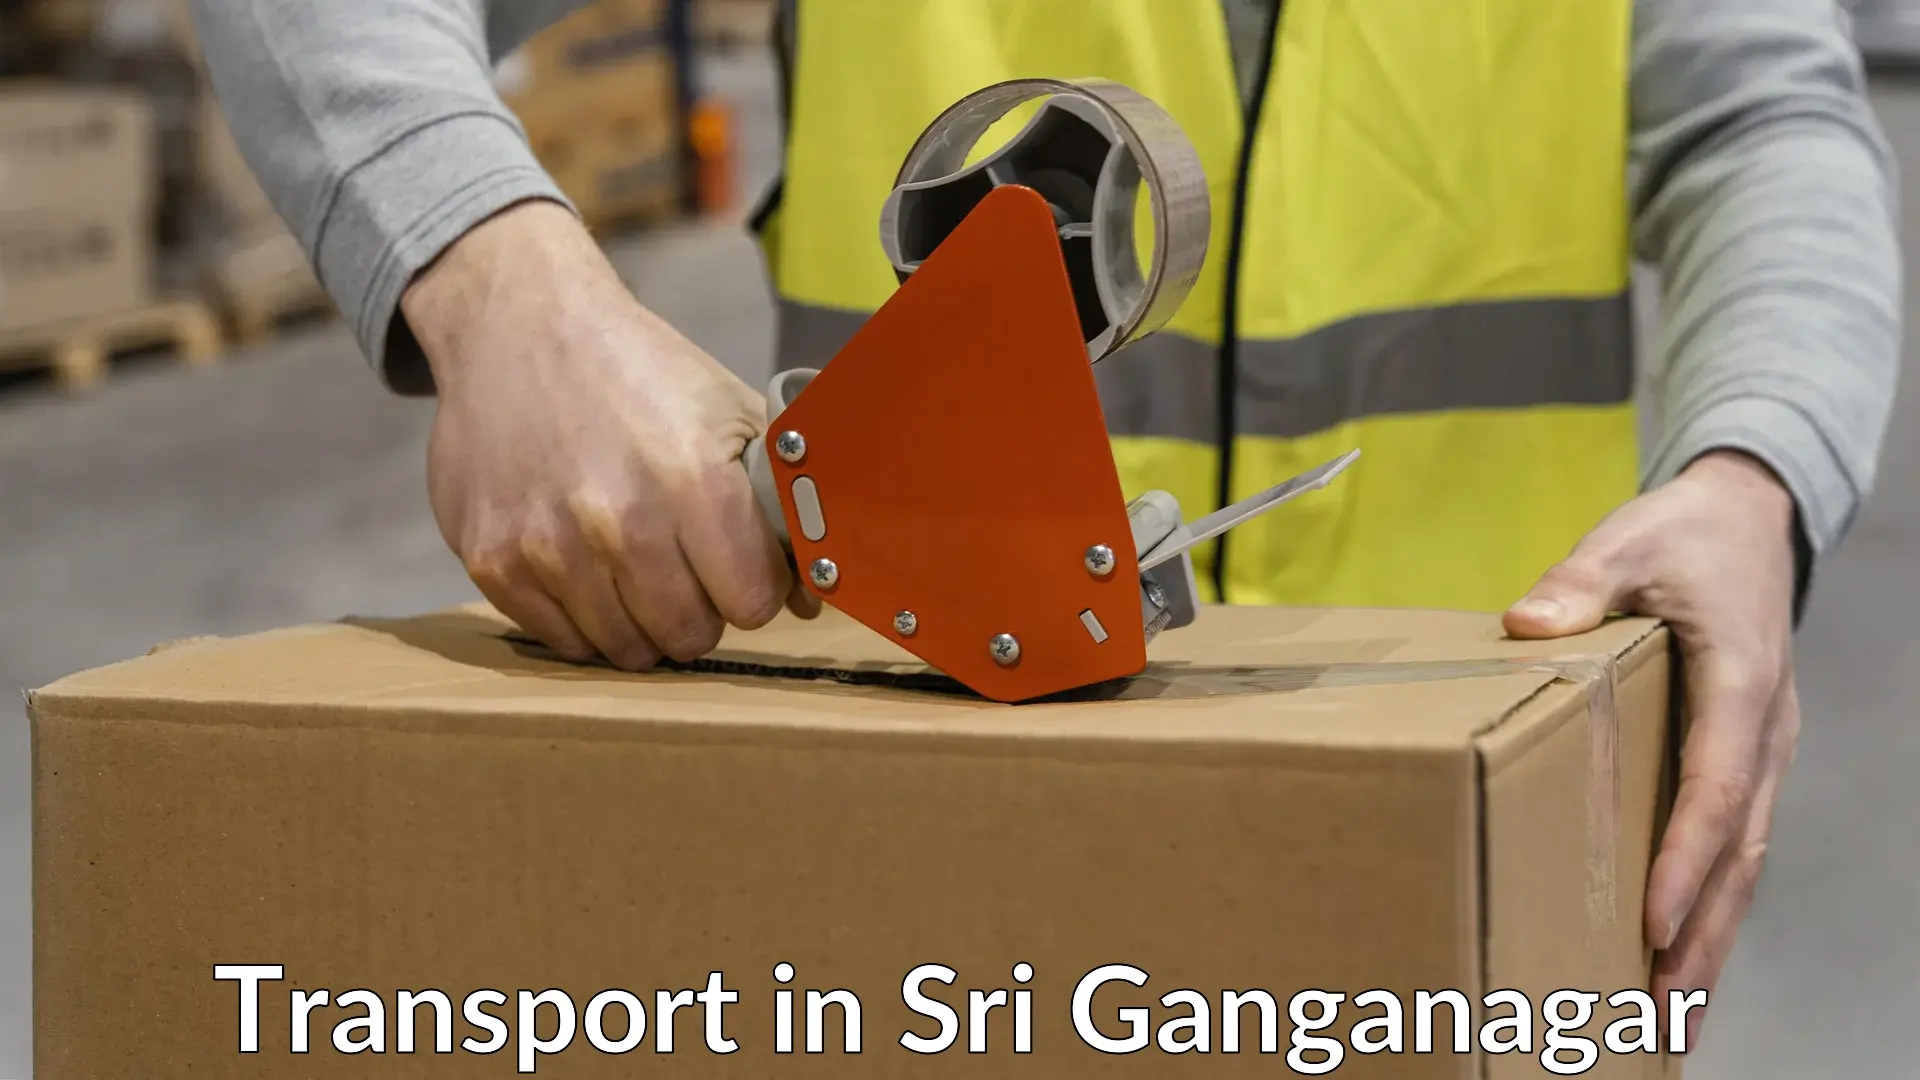 Cargo transport services in Sri Ganganagar